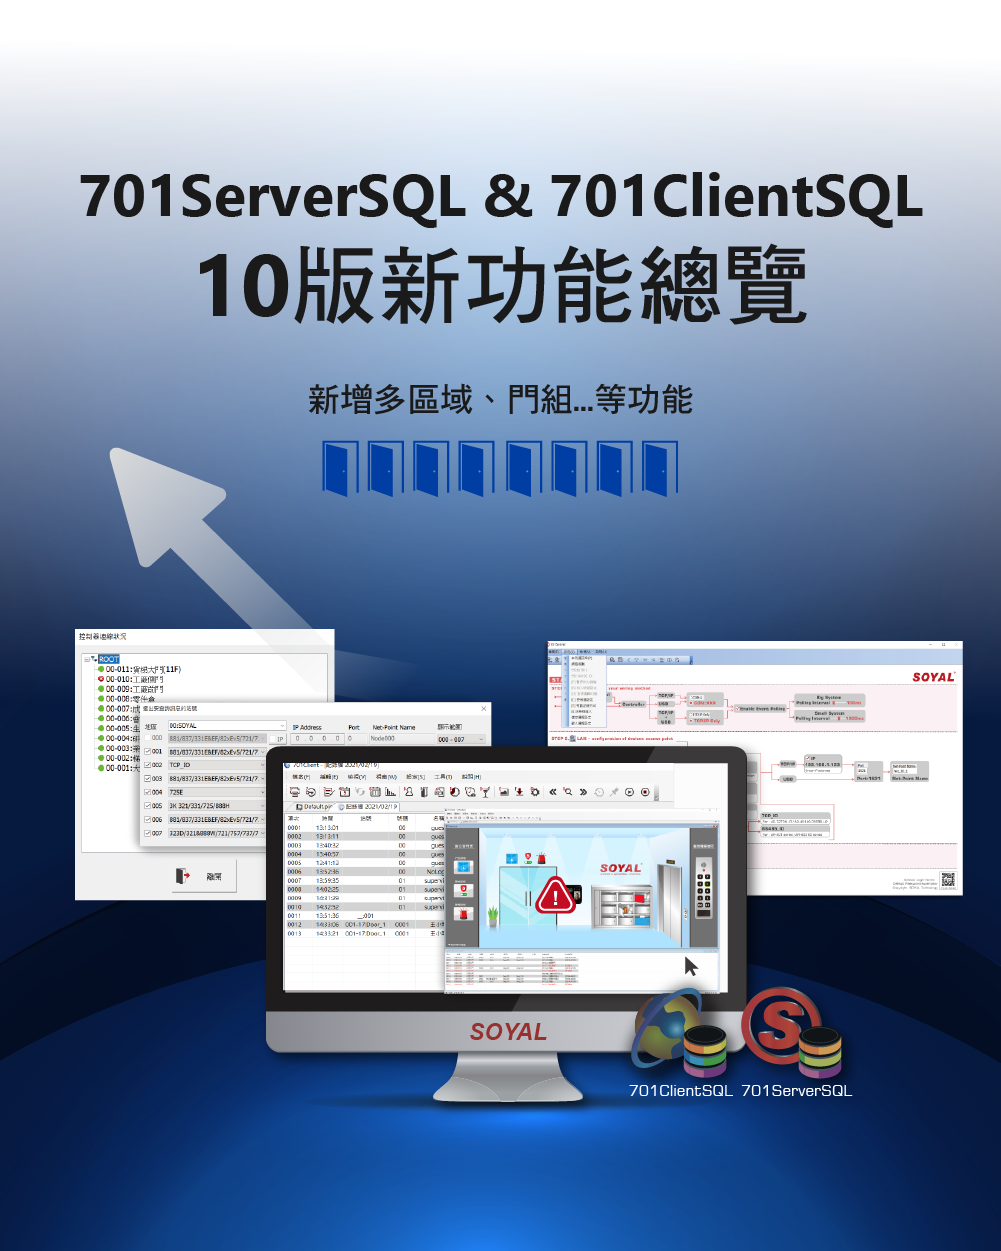 701ServerSQL & 701ClientSQL 10V 版本新功能總覽(圖)